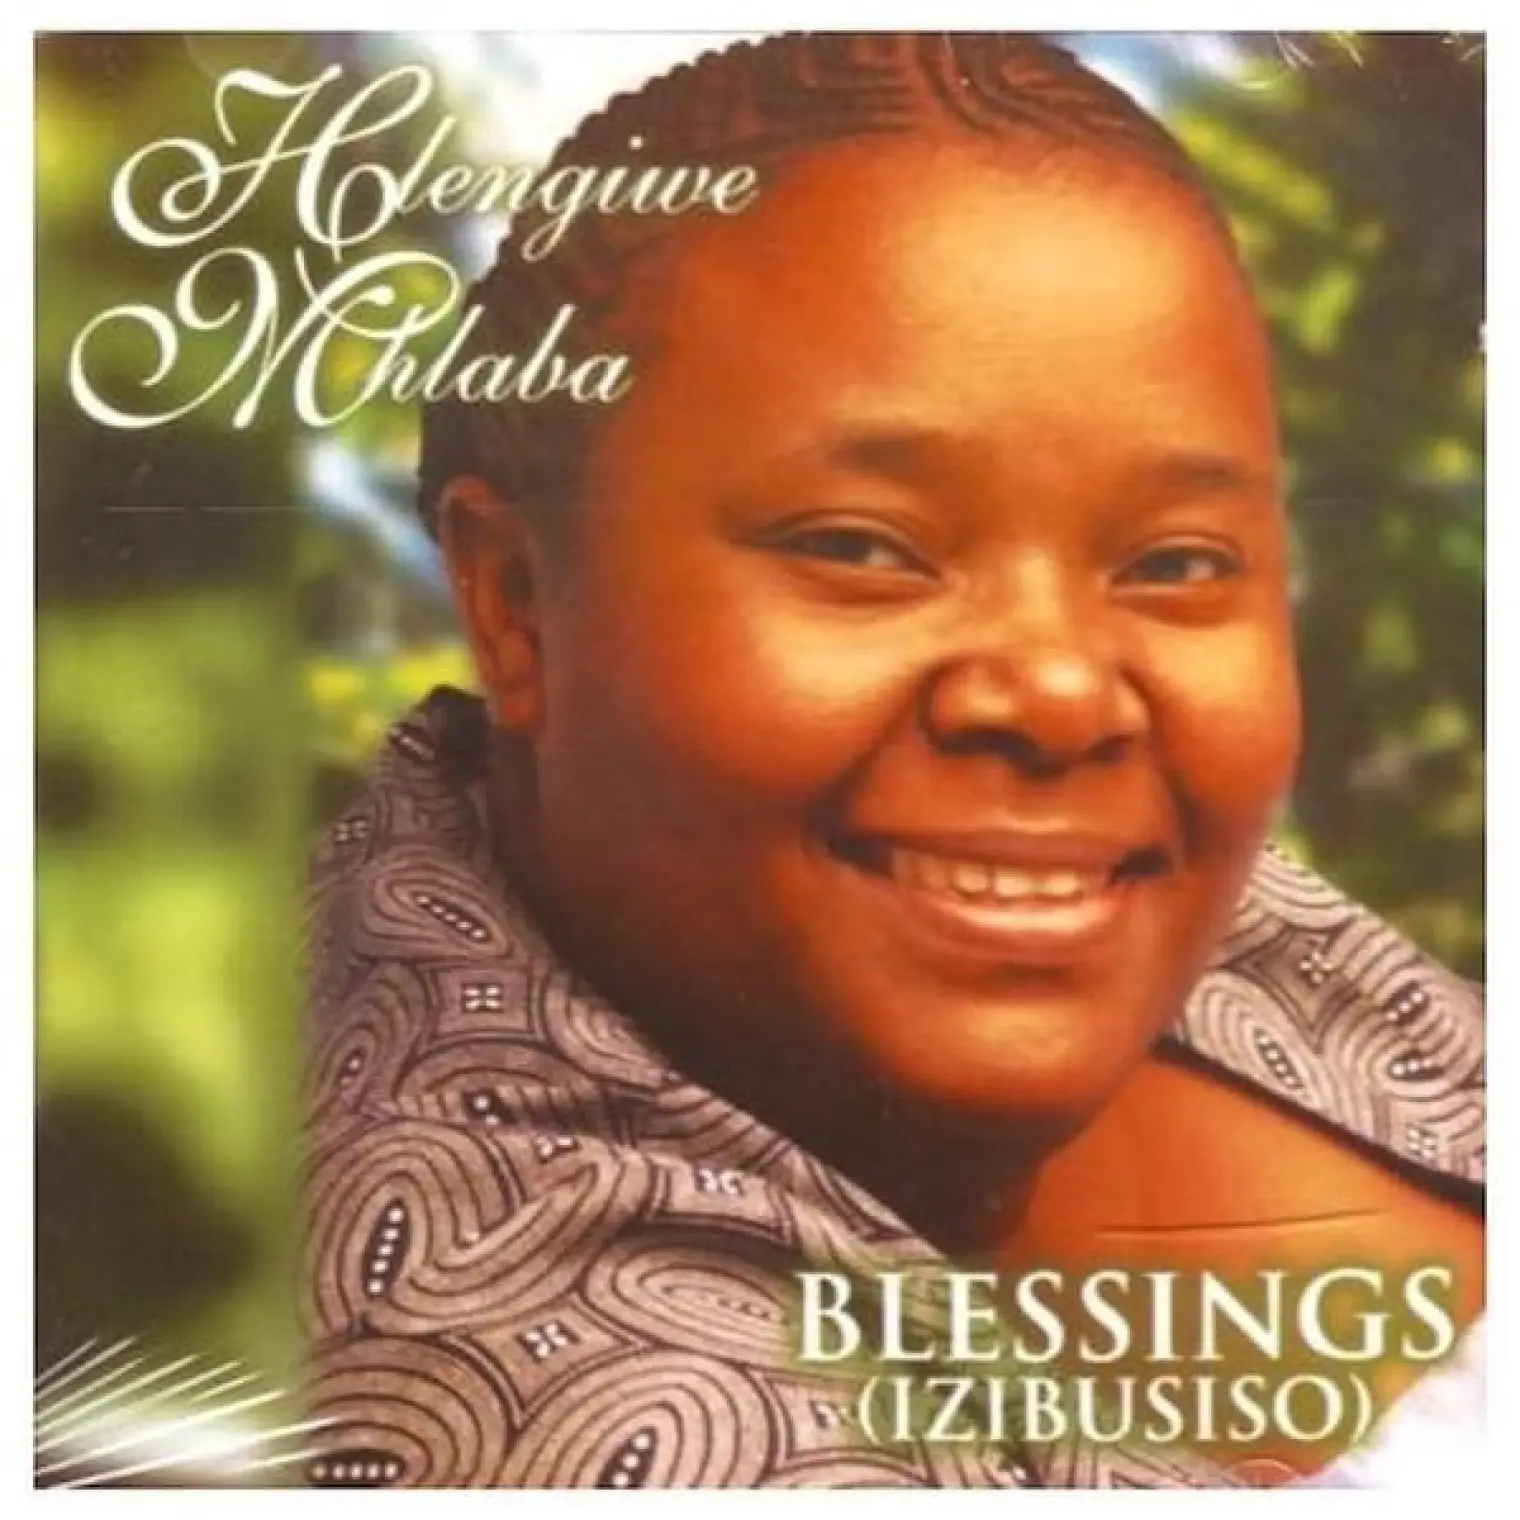 Blessings -  Hlengiwe Mhlaba 